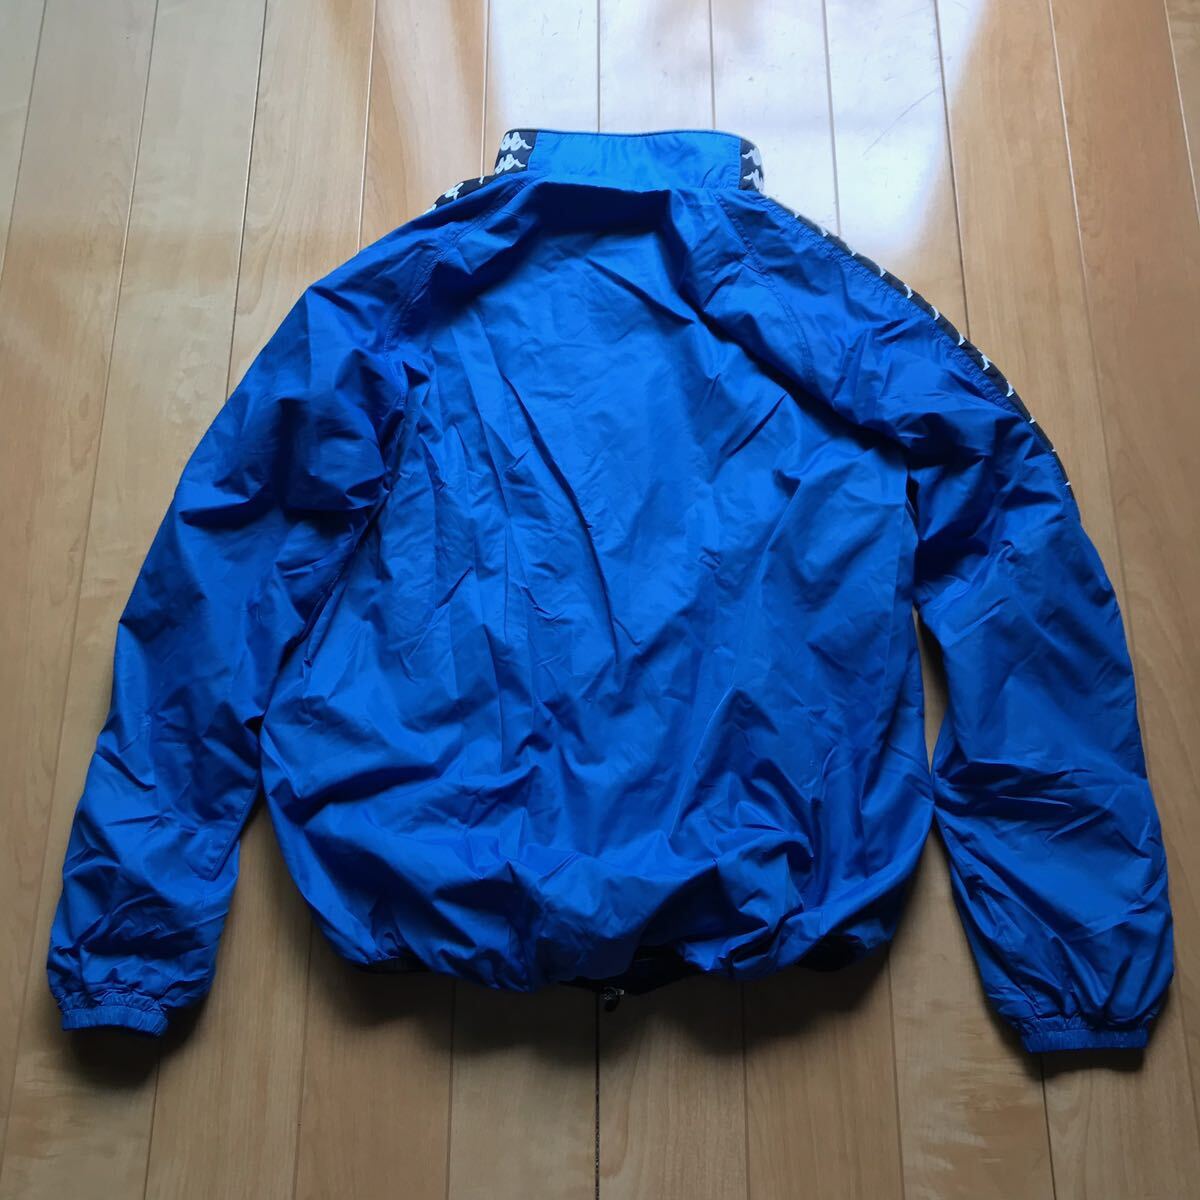  Kappa jersey 028-1-335 men's L blue 